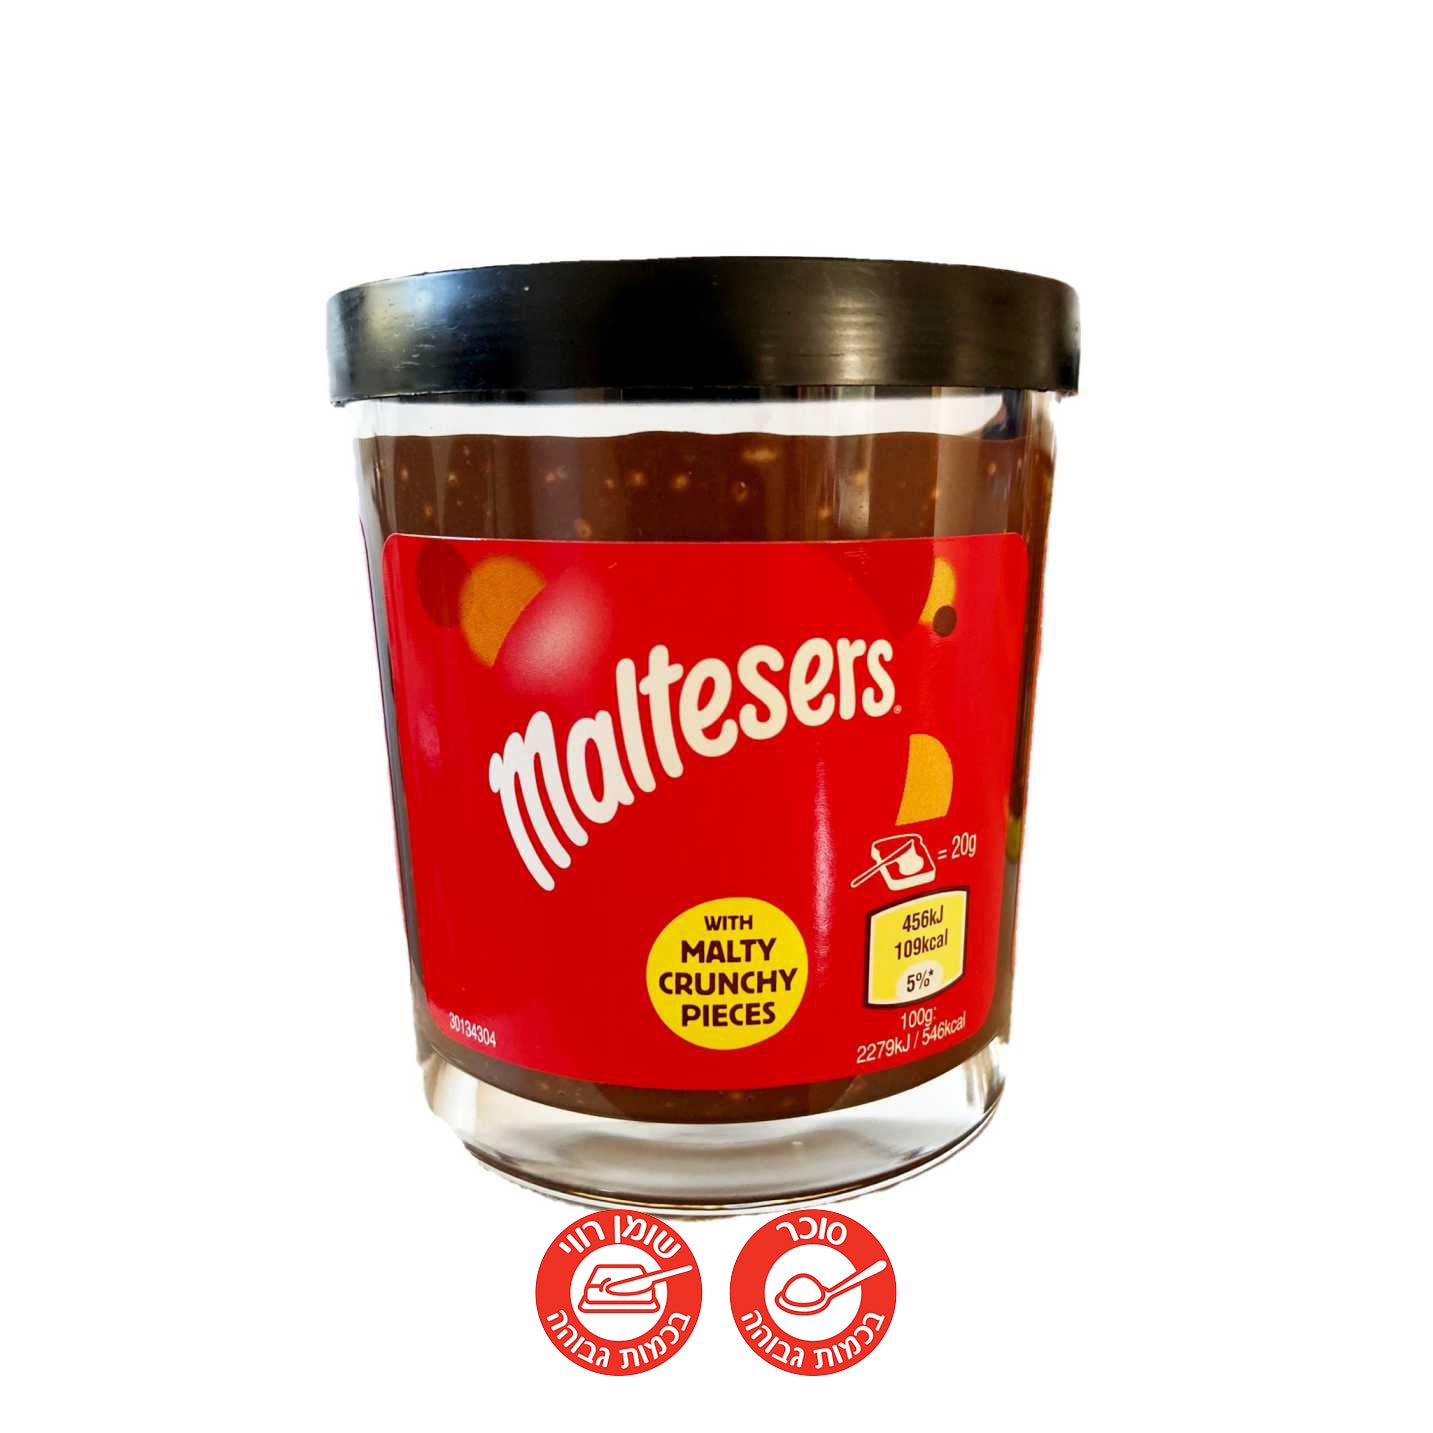 Maltesers Spread ממרח מלטיזרס